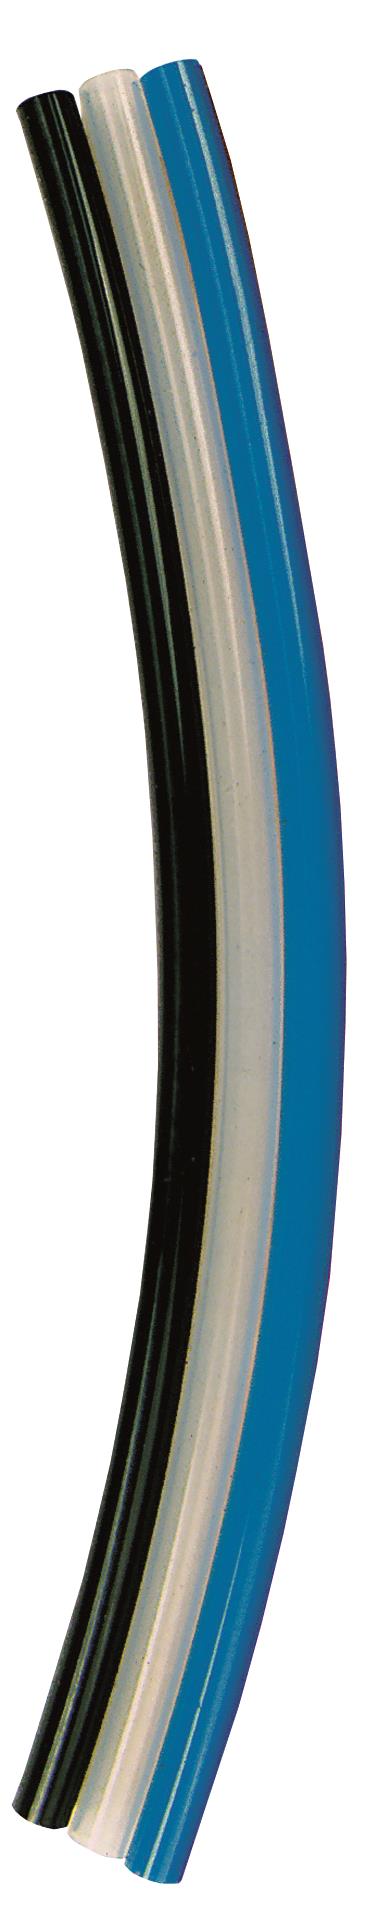 Luftschlauch Druckluft Pneumatikschlauch PU Polyurethanschlauch blau 4-12mm PUN 